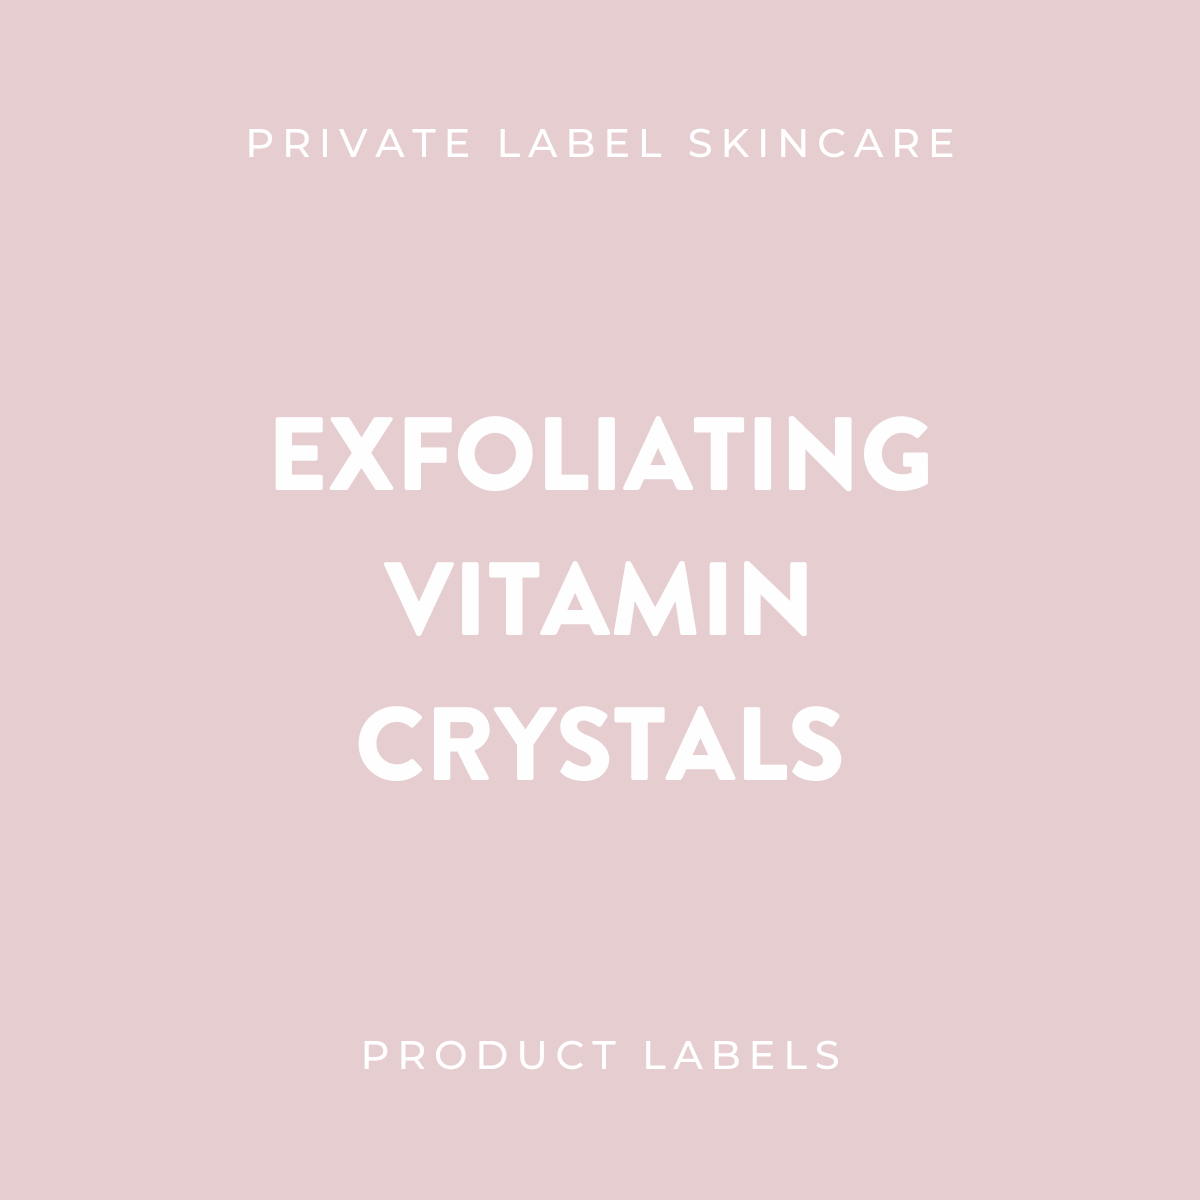 Exfoliating Vitamin Crystals Product Labels (x 20 labels)